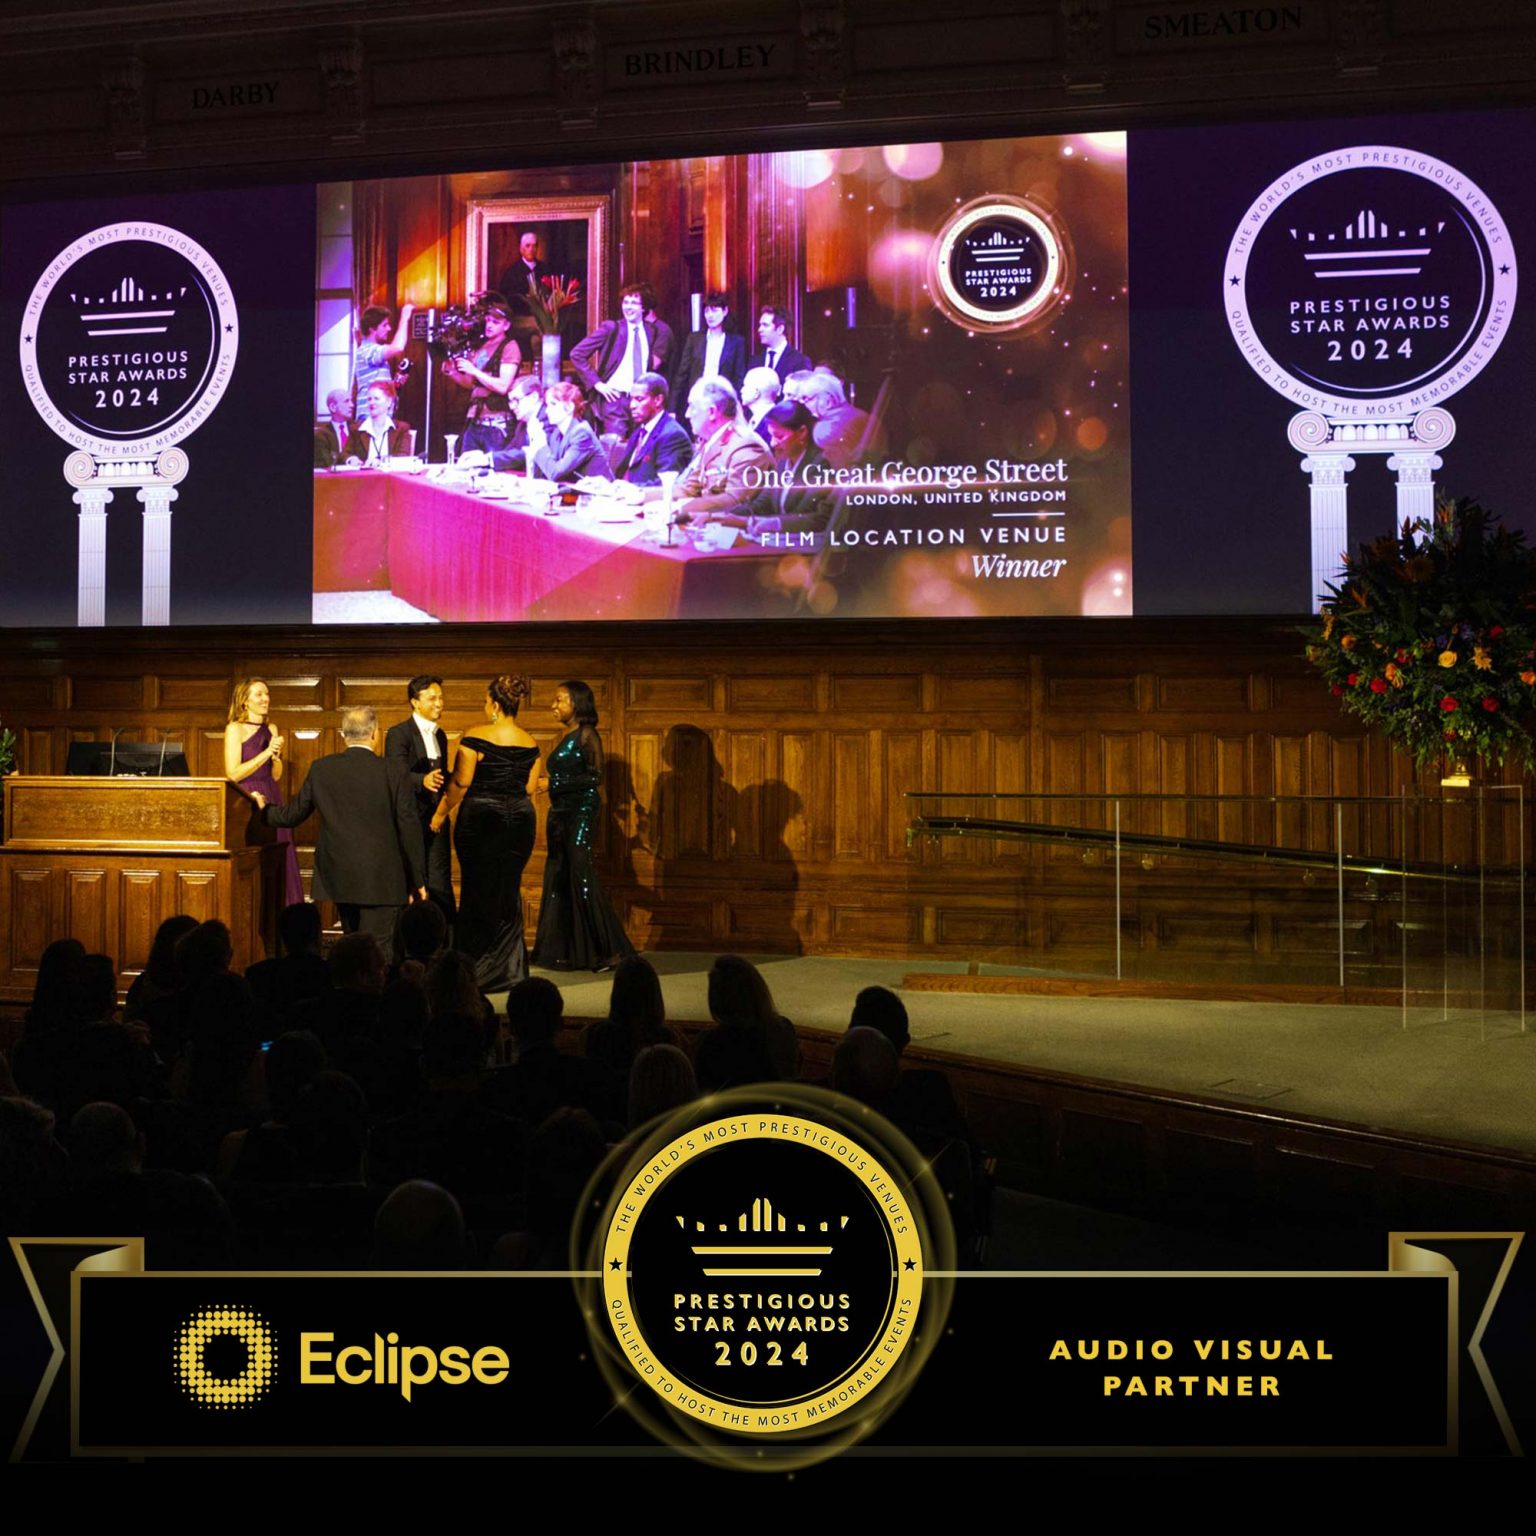 Audio Visual Partner 2024   Eclipse, Prestigious Star Awards